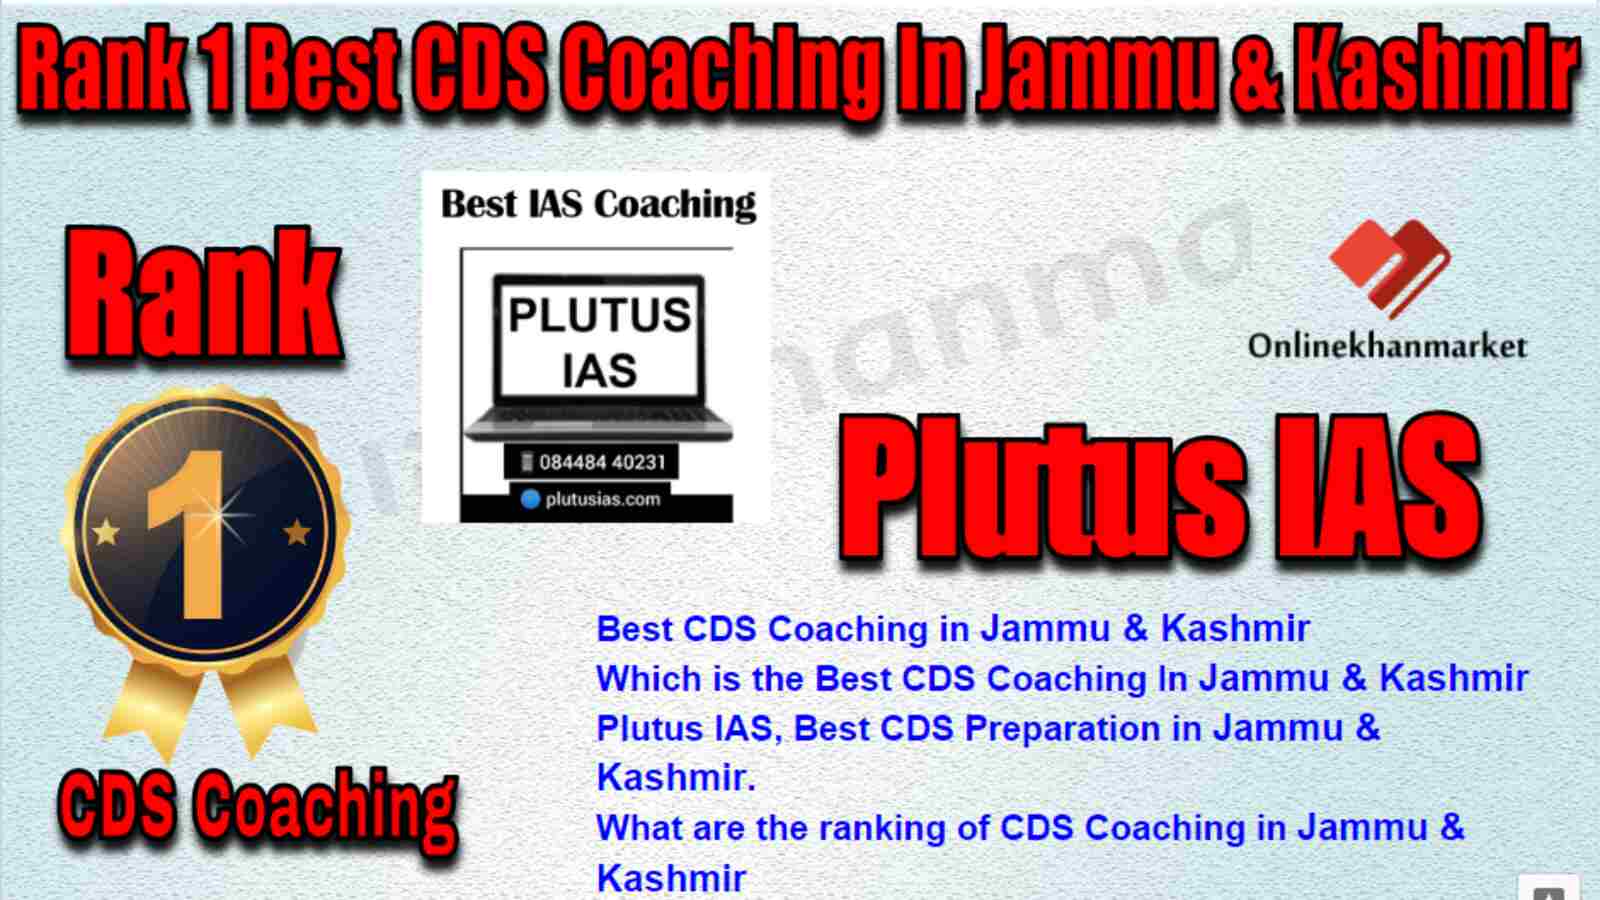 Rank 1 Best CDS Coaching in Jammu & Kashmir